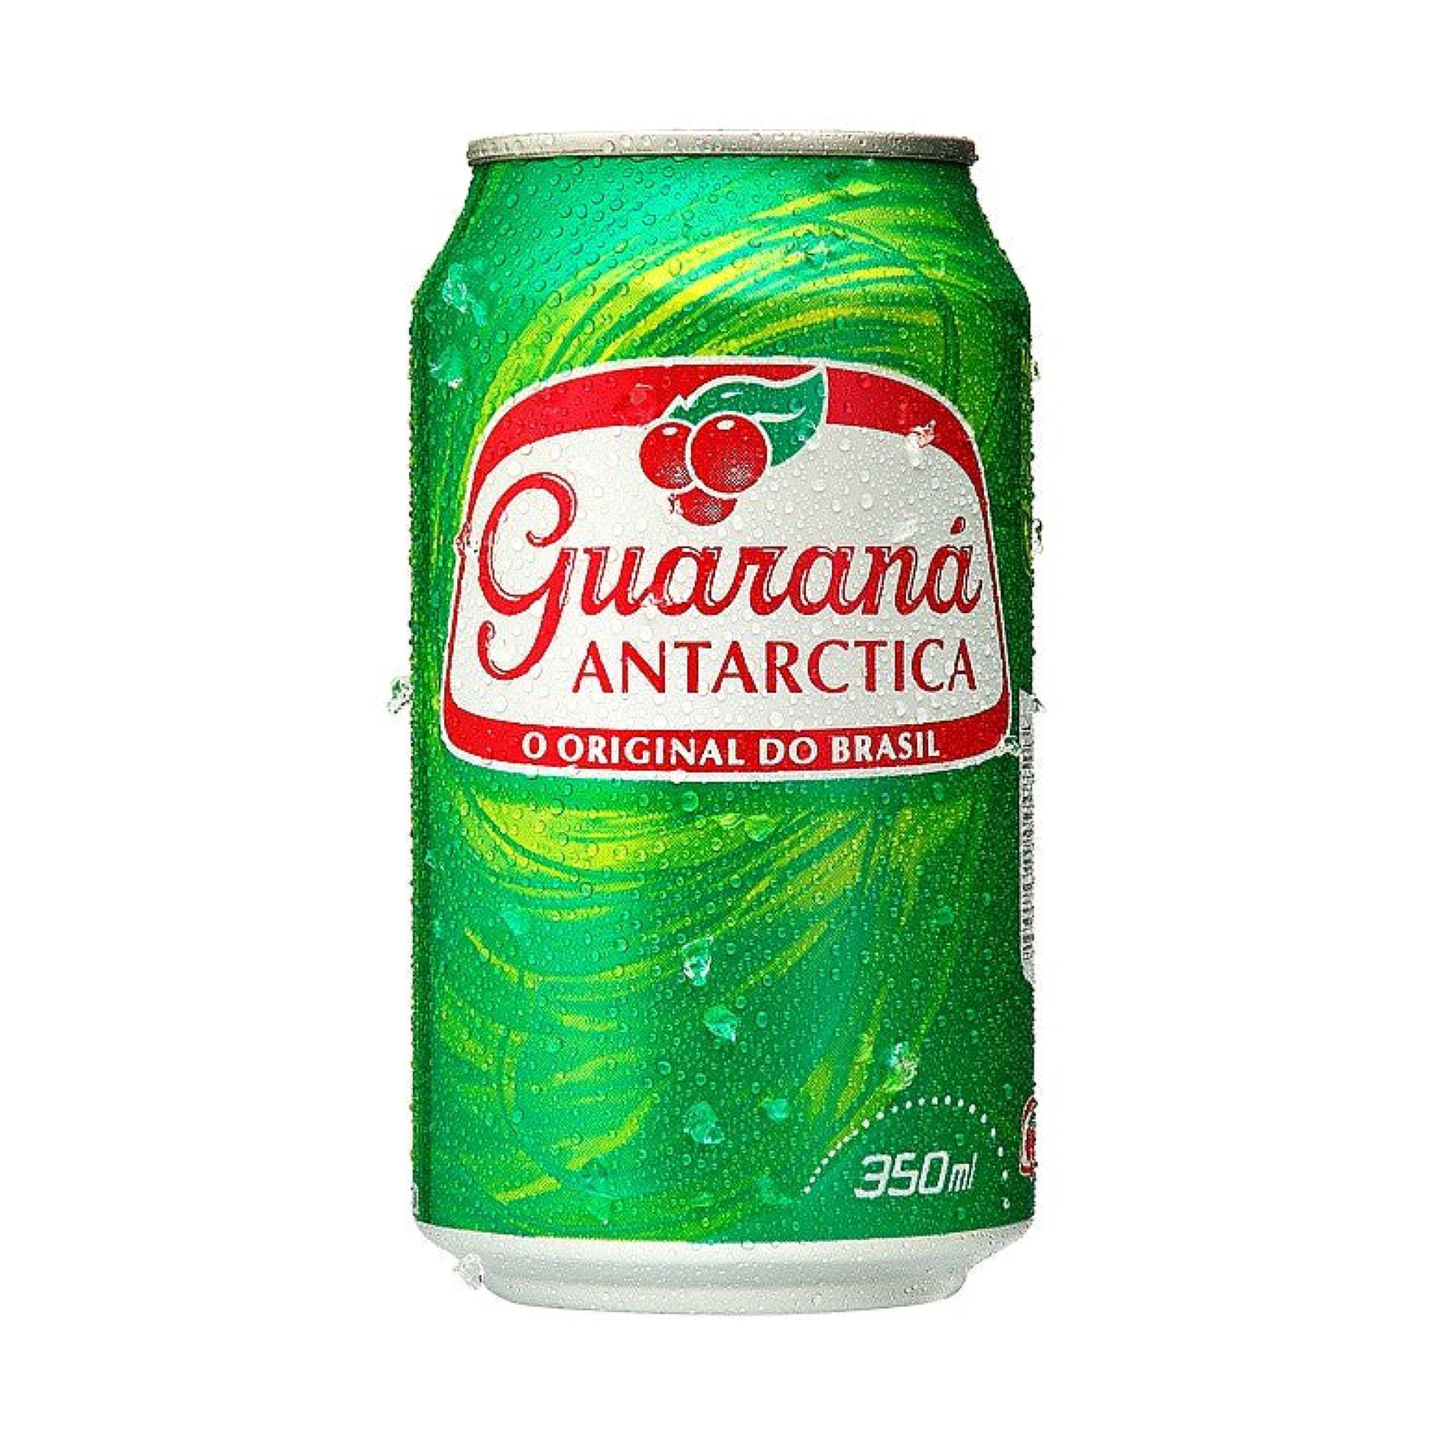 Guarana Antartica (350ml) + Bottle Deposit